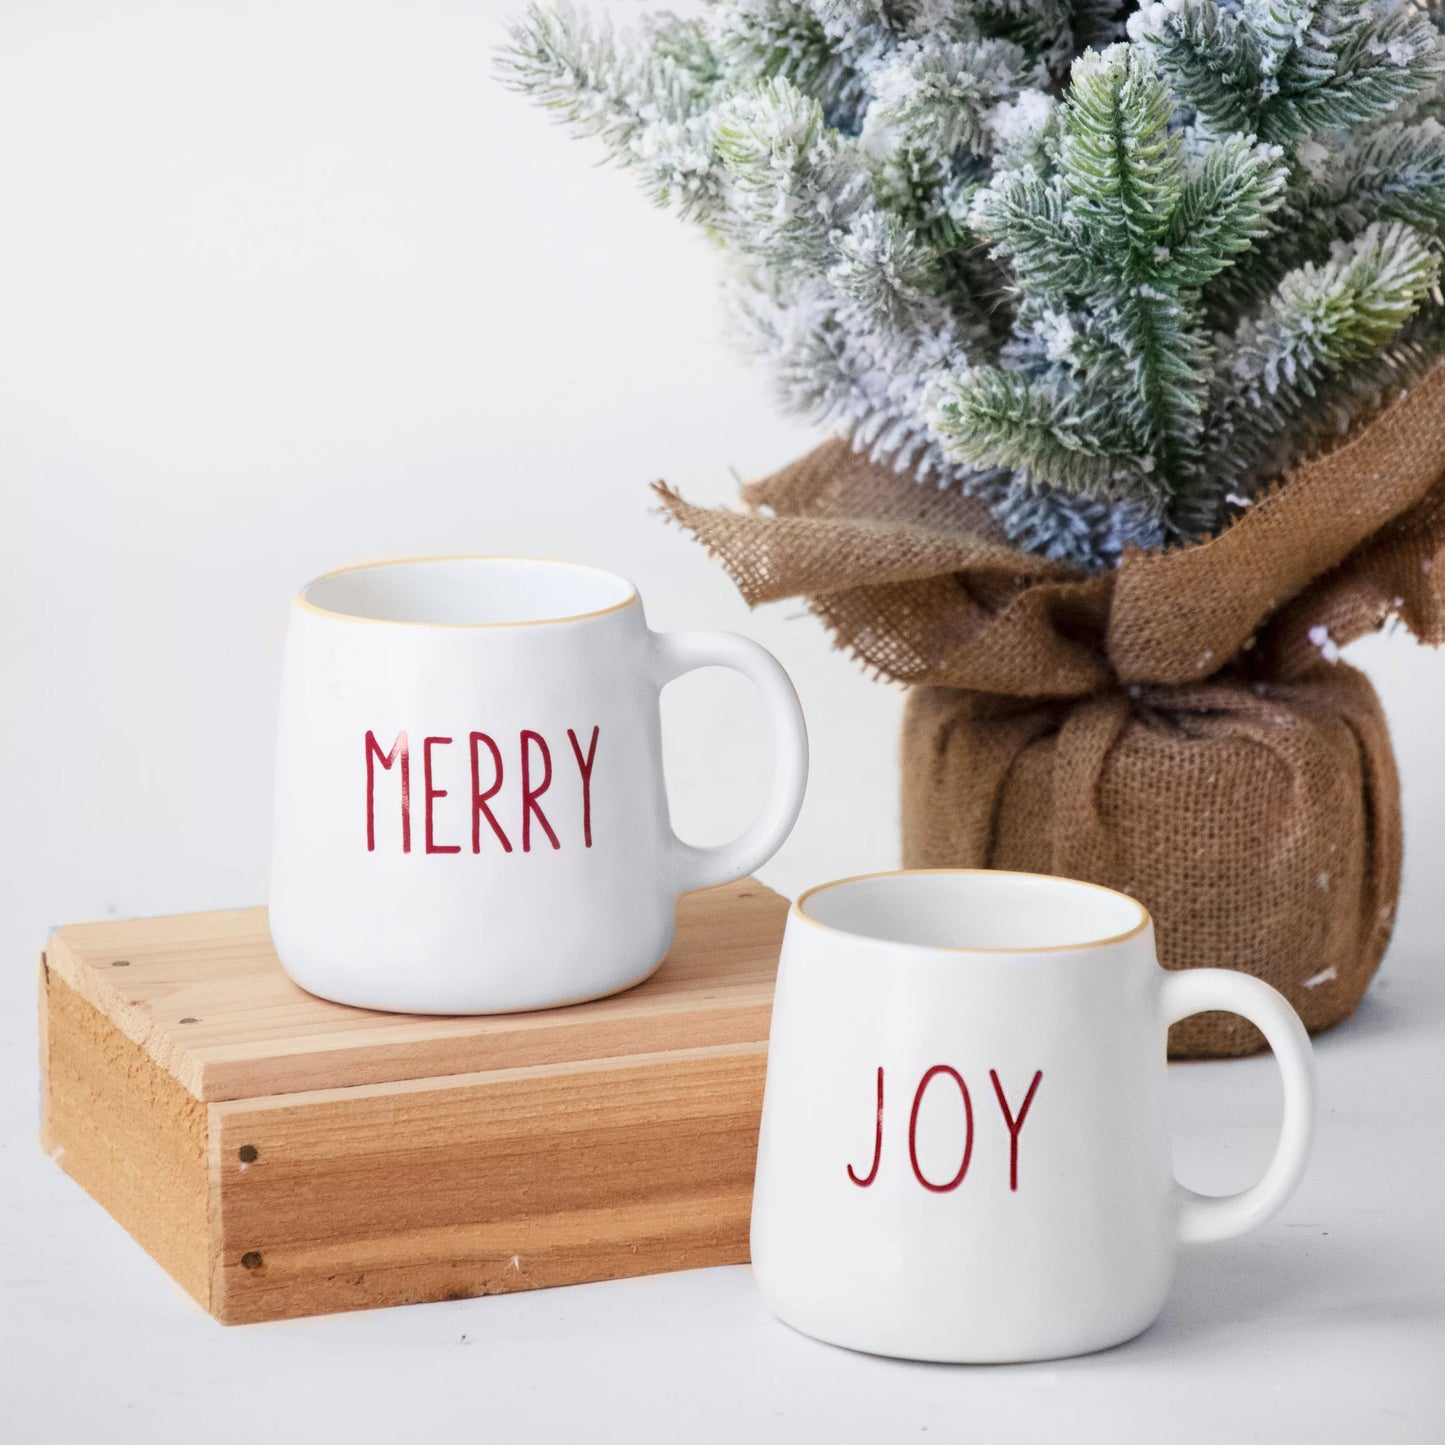 Joy/Merry Mug